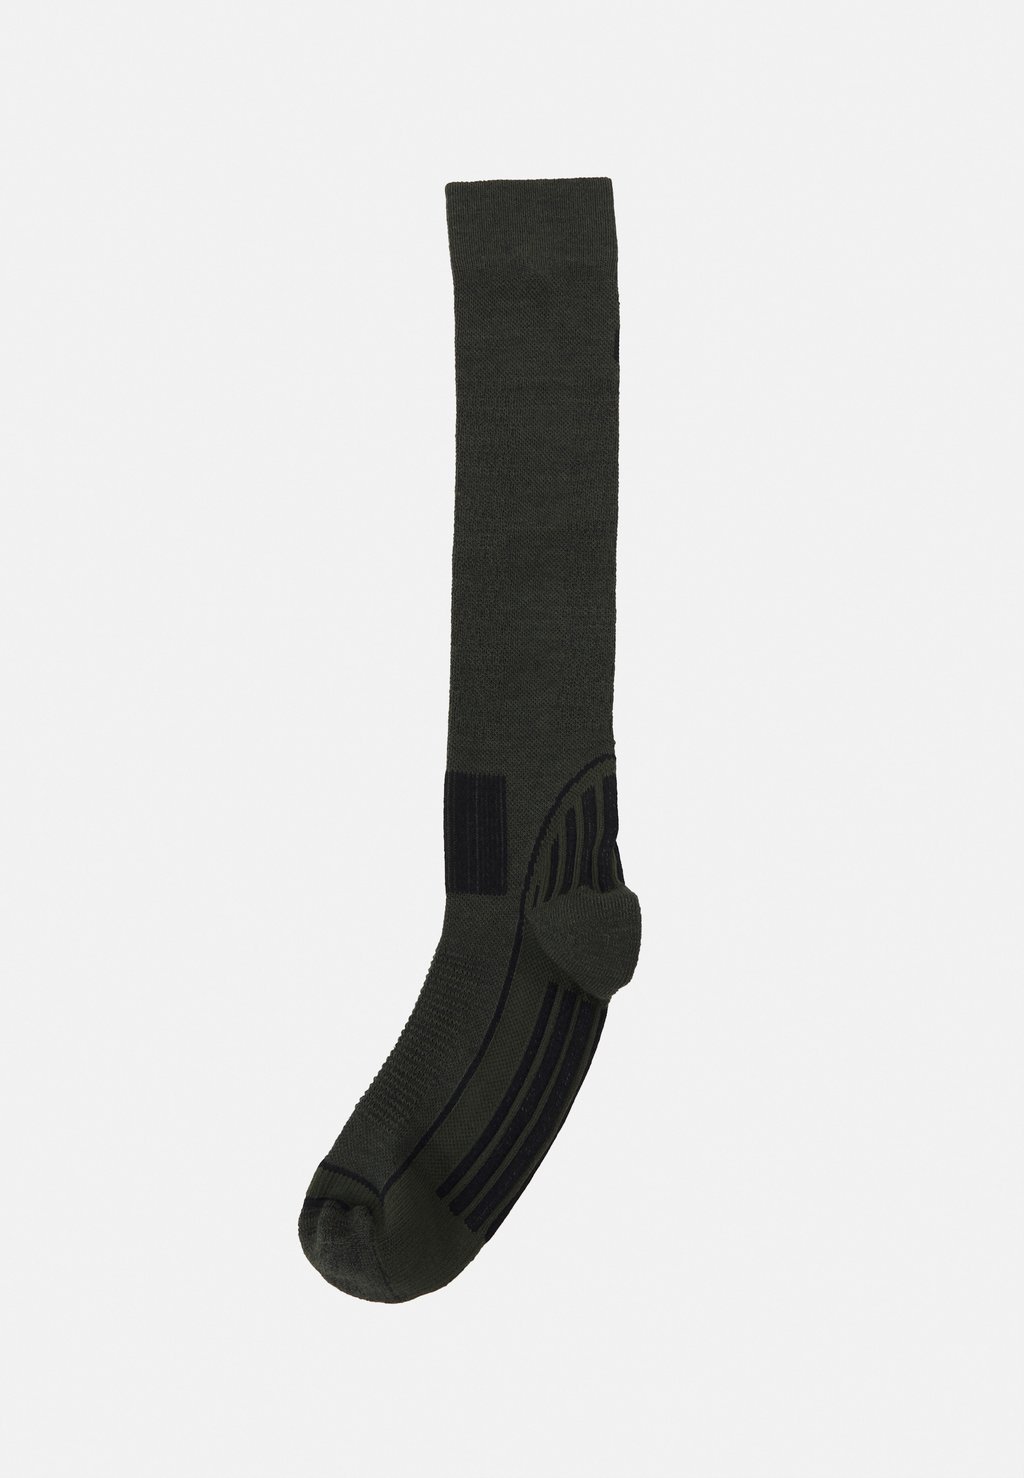 спортивные носки ski sock unisex peak performance цвет black grey melange Спортивные носки SKI SOCK UNISEX Peak Performance, цвет dark green/black